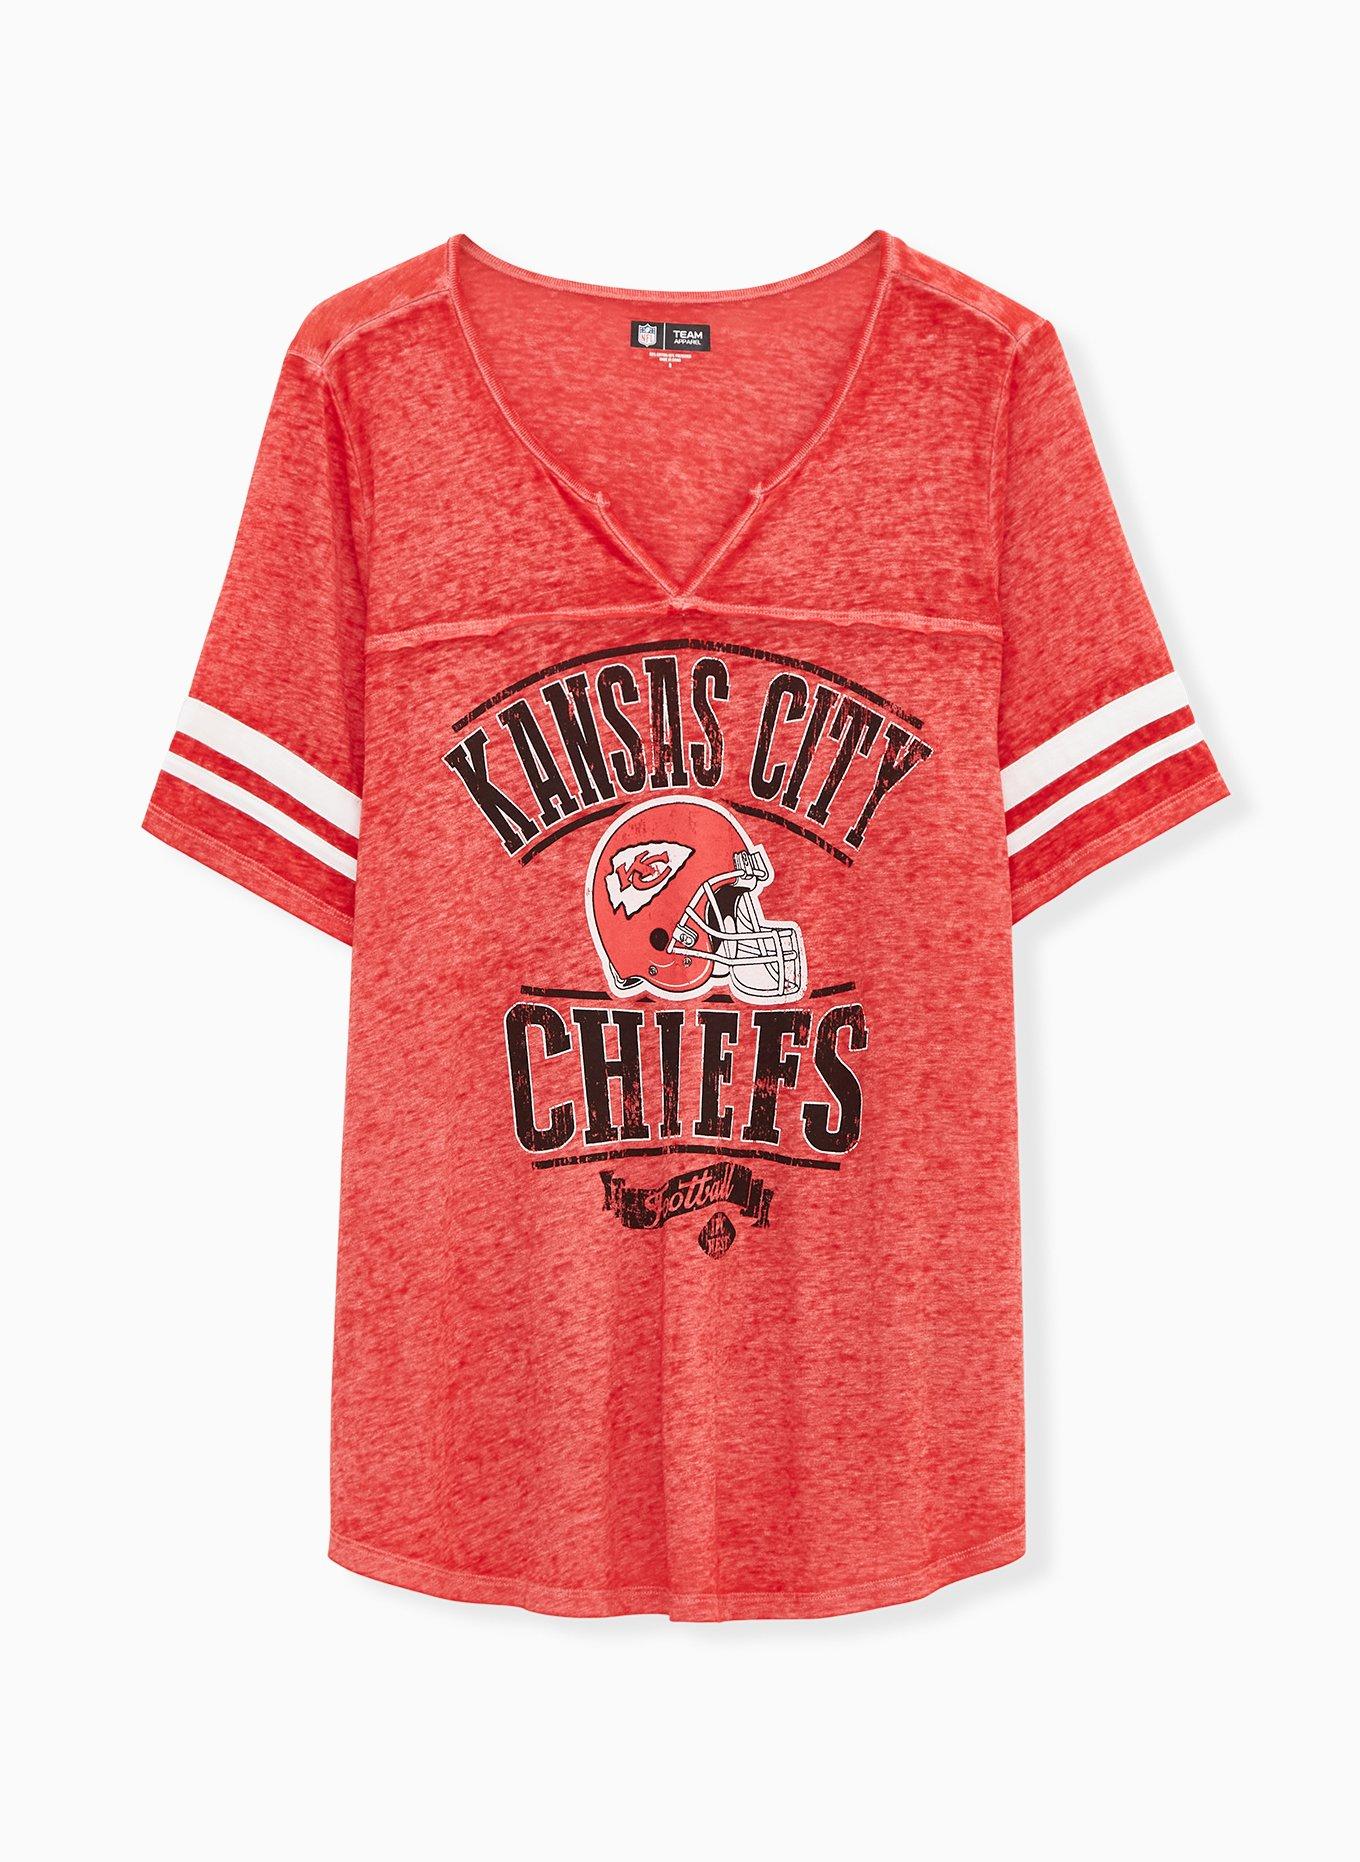 Kansas City Royals MLB Flower Sky Coconut Hawaii Shirt - YesItCustom